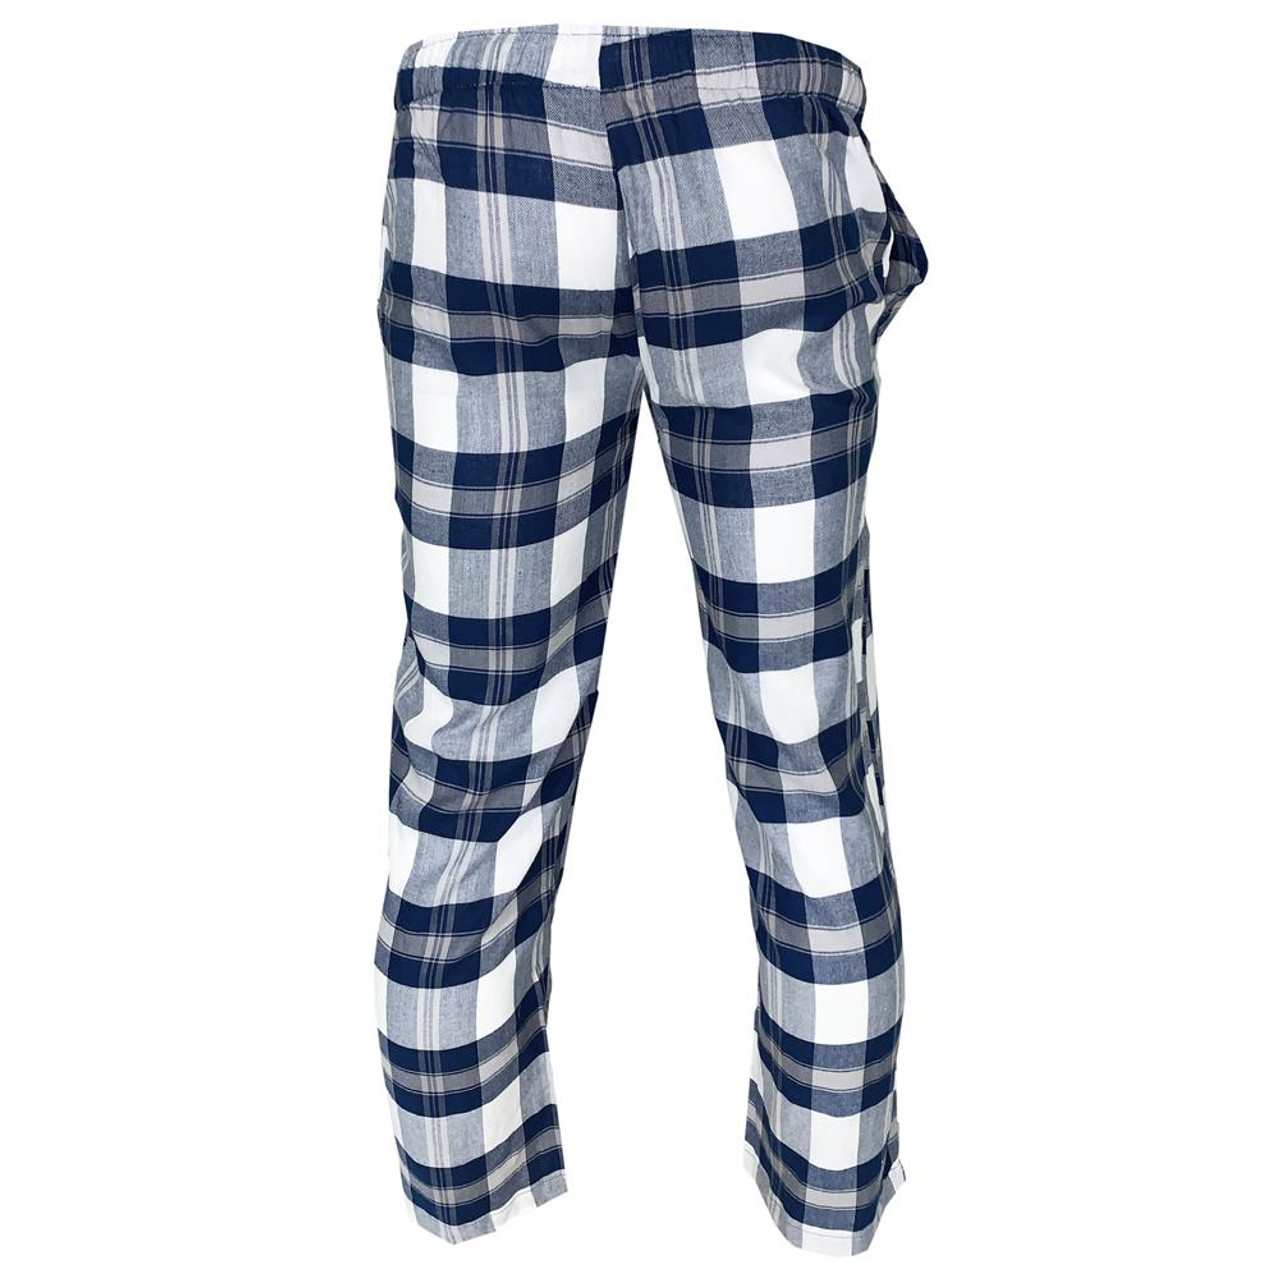 Park Plaid Pajama Pant, Sleepwear, Lounge